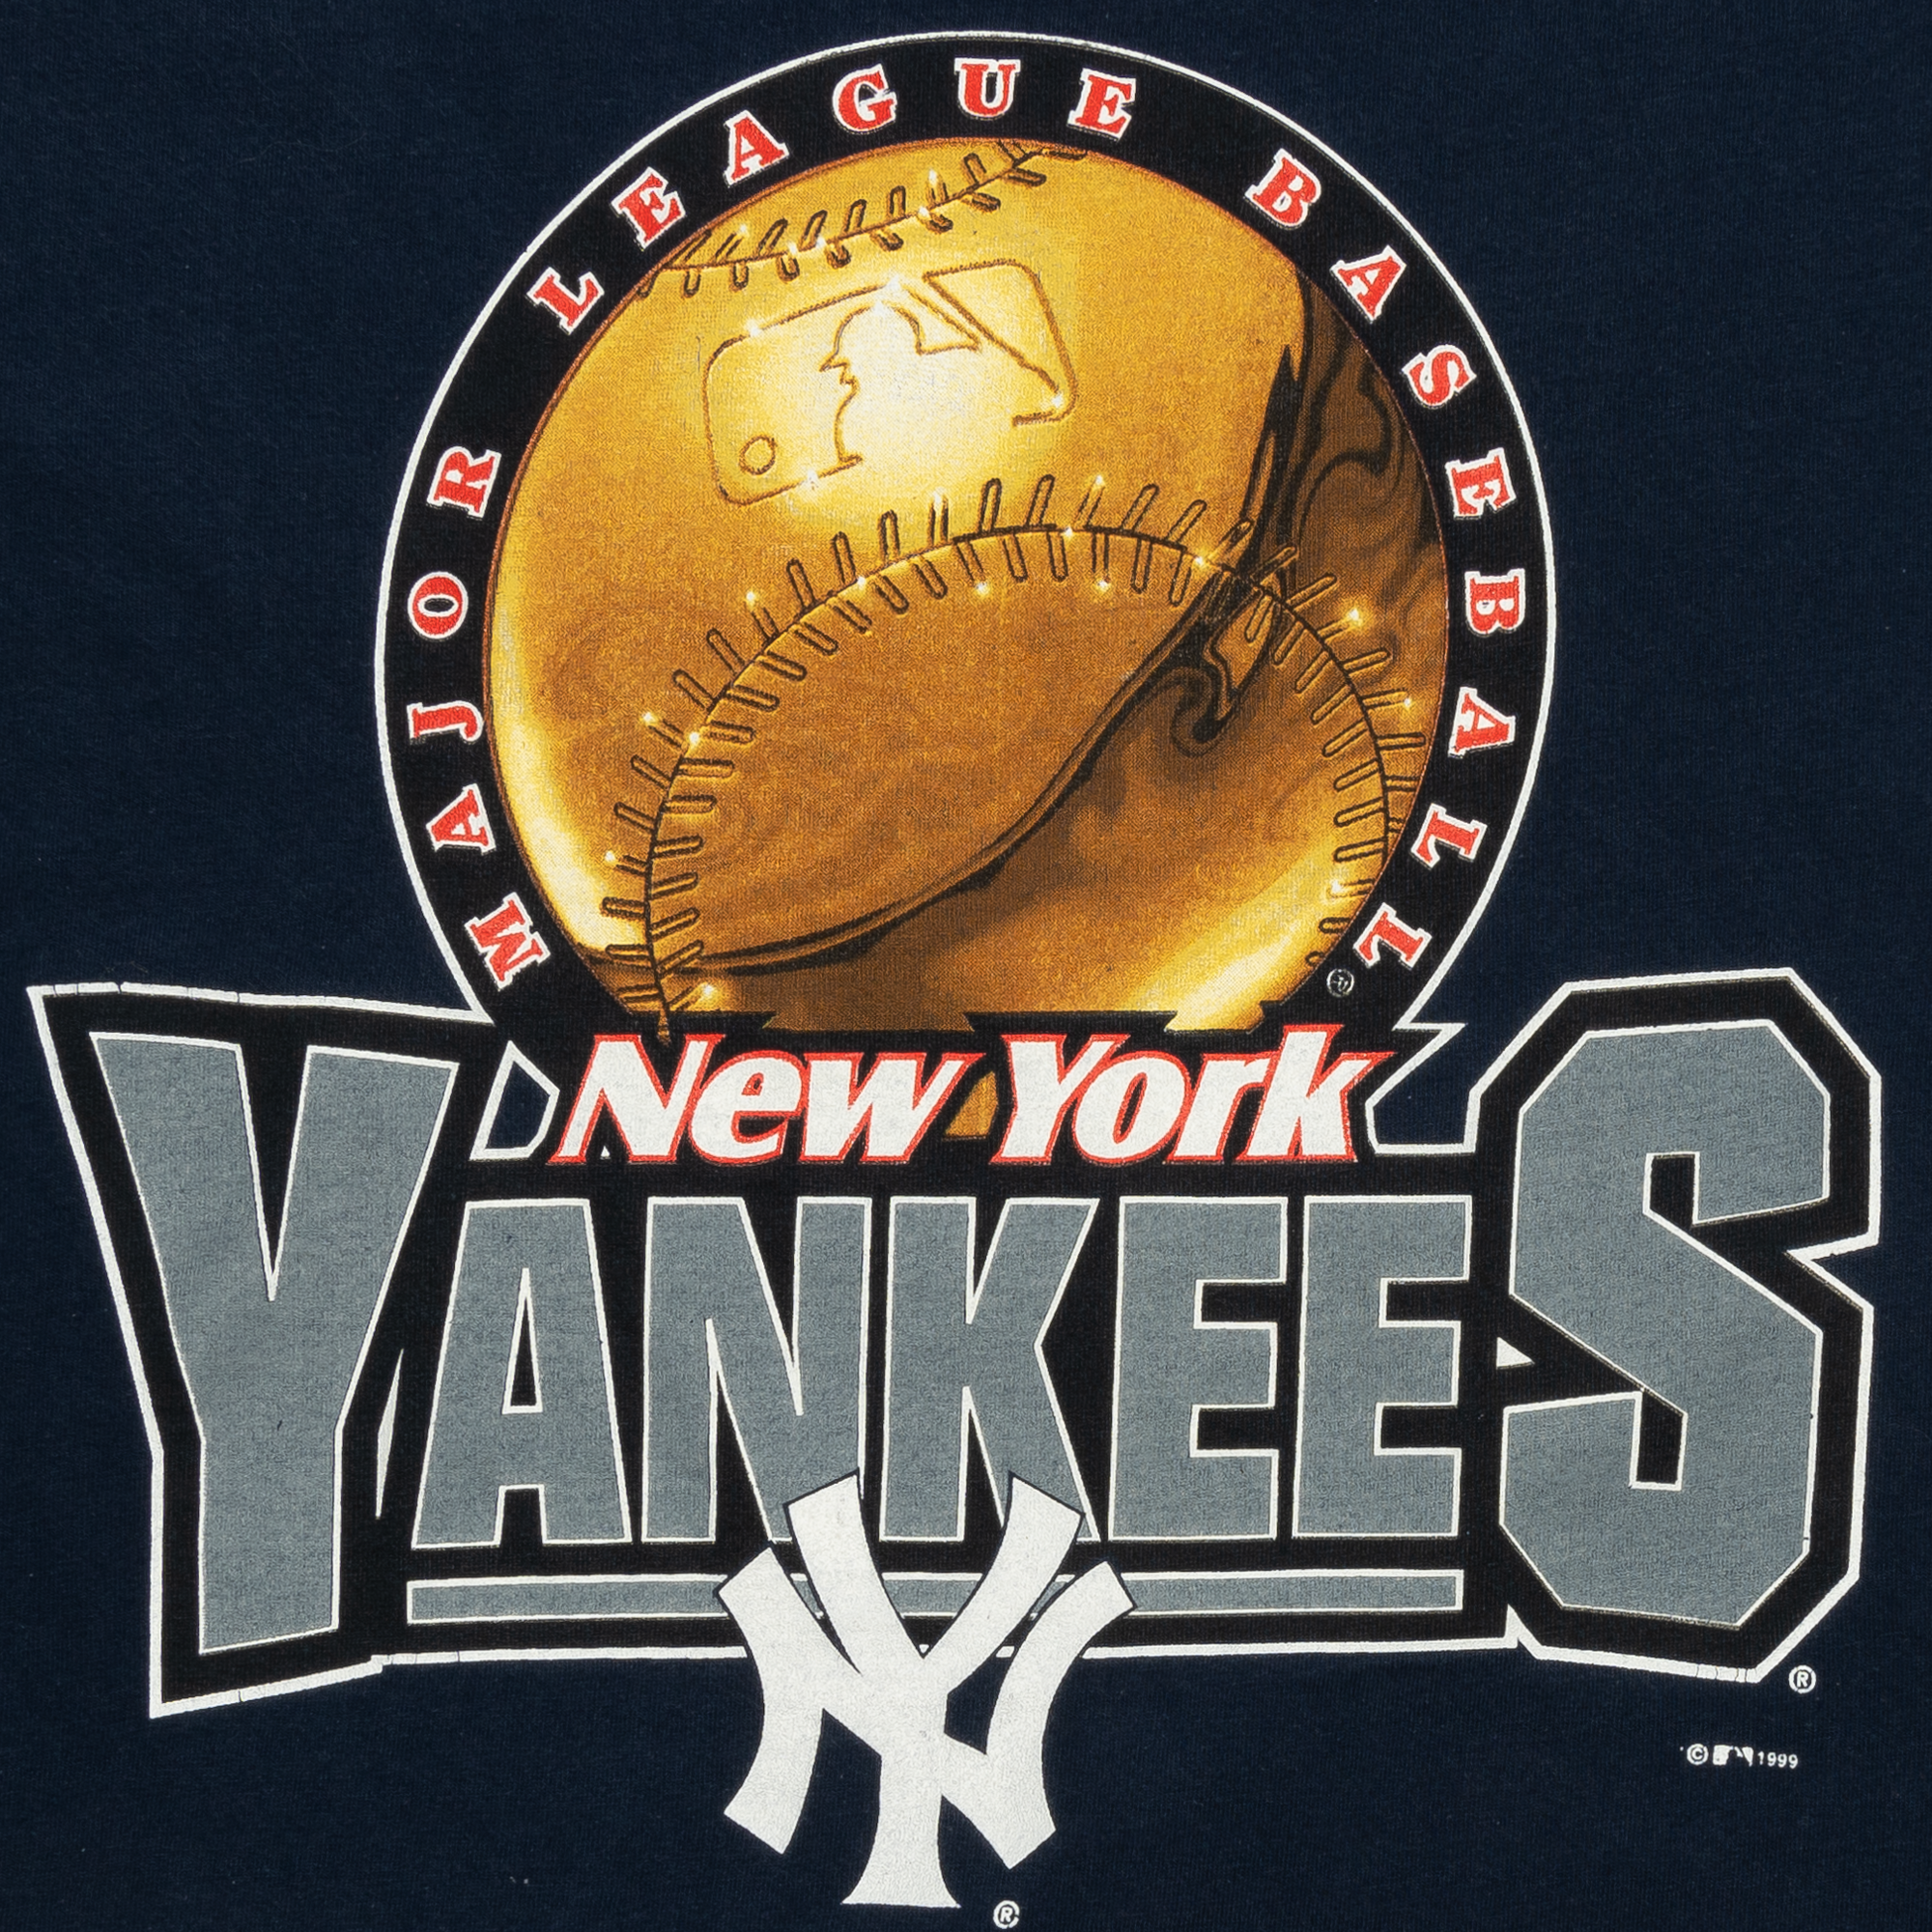 New York Yankees Golden Ball Logo 7 1999 MLB Tee Navy-PLUS